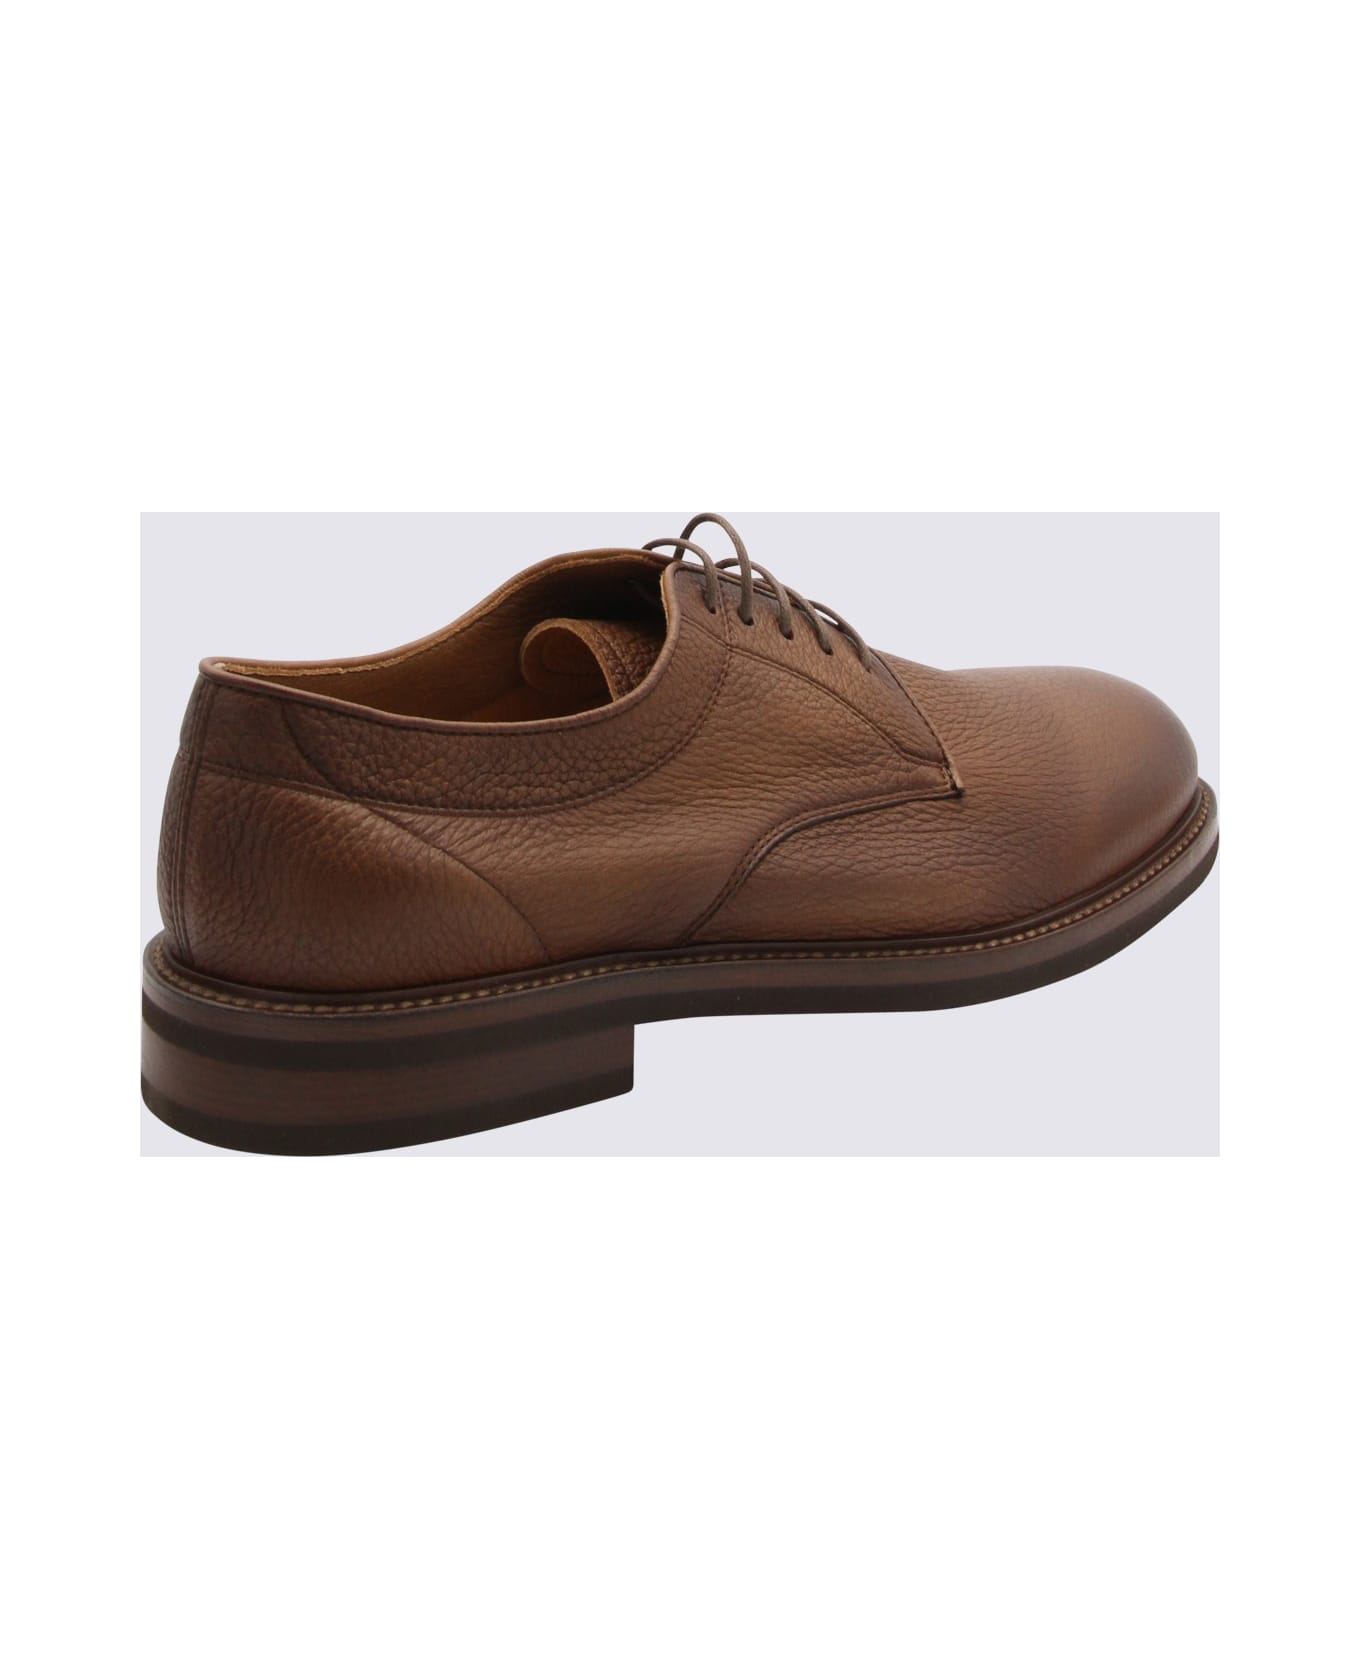 Brunello Cucinelli Brown Leather Derby Shoes - Brandy